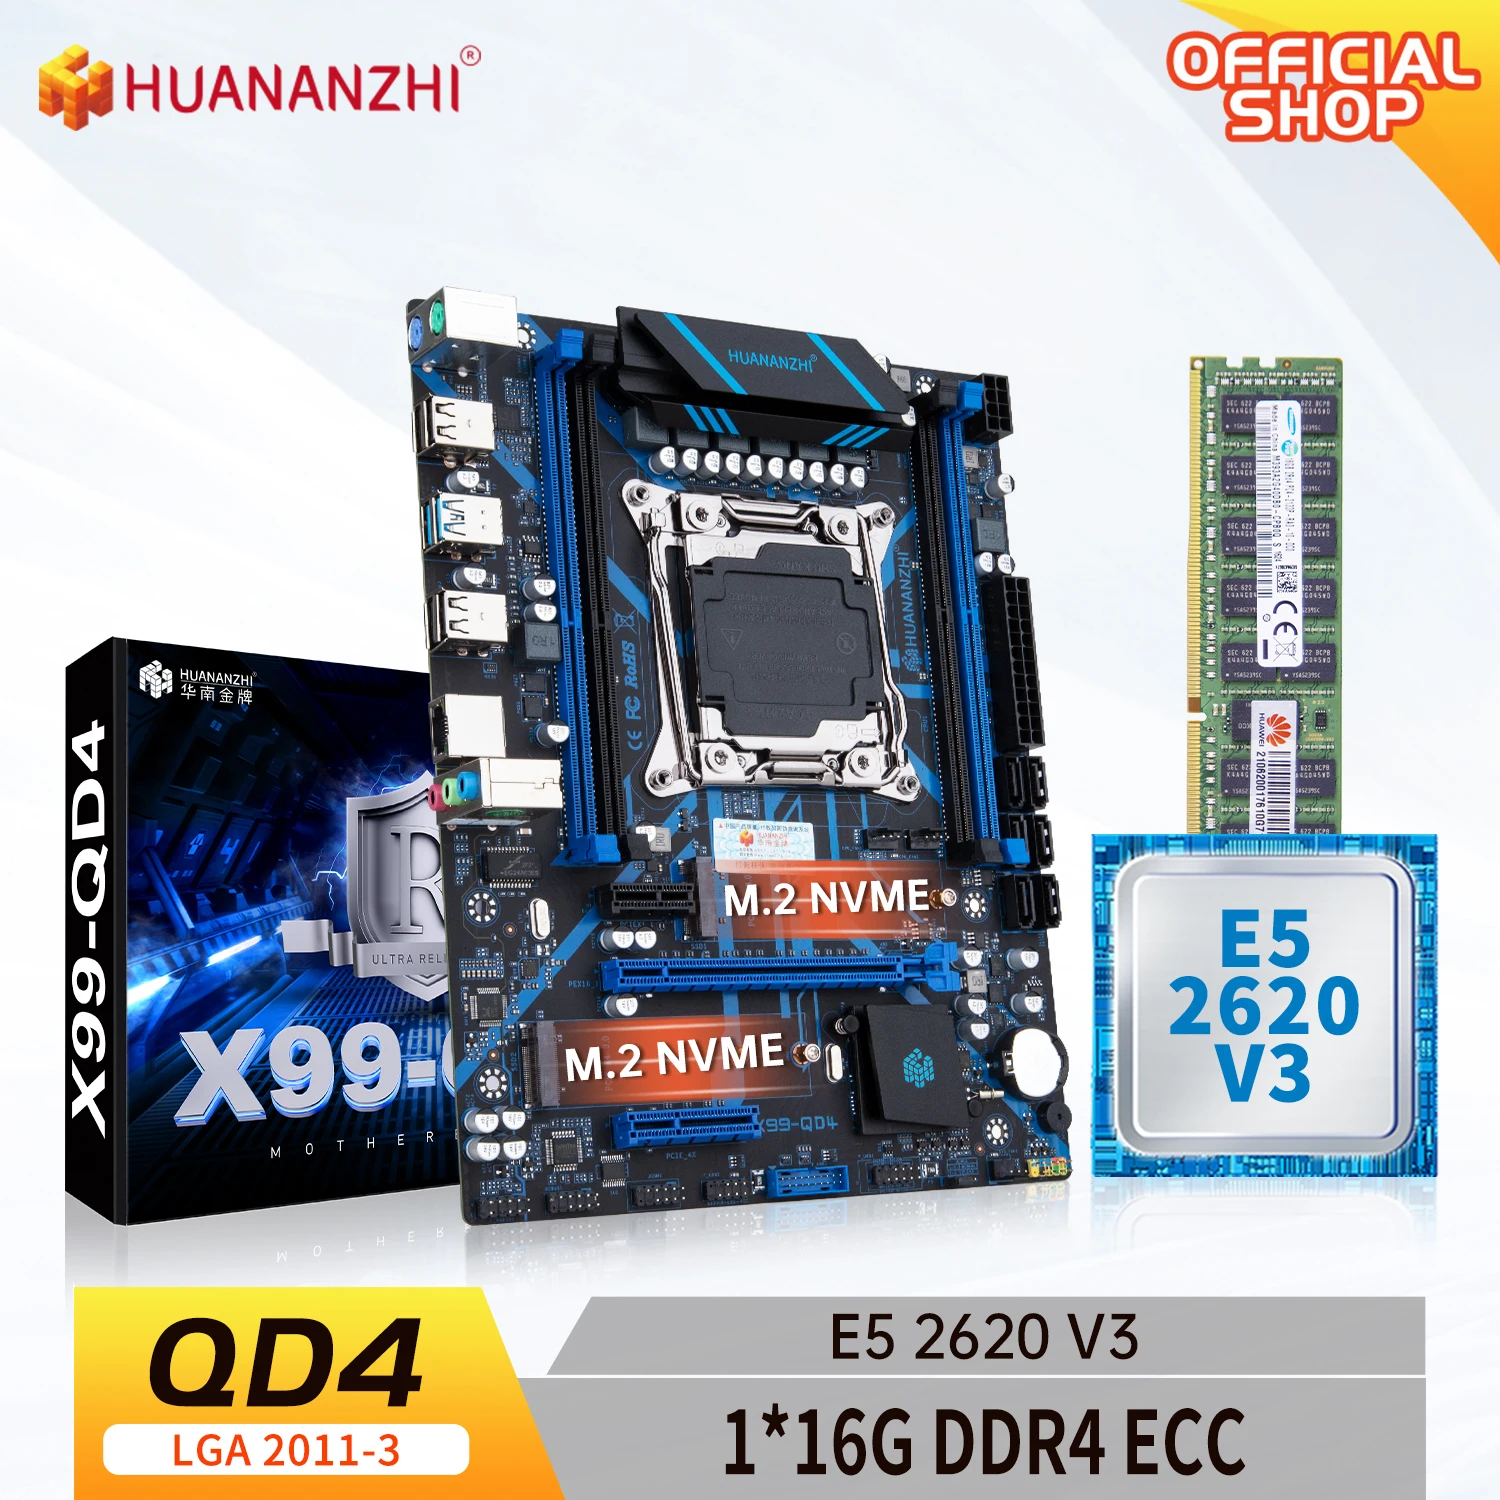 HUANANZHI X99 QD4 X99 Motherboard with Intel XEON E5 2620 v3 with 1*16G DDR4 RECC memory combo kit set NVME NGFF SATA USB 3.0